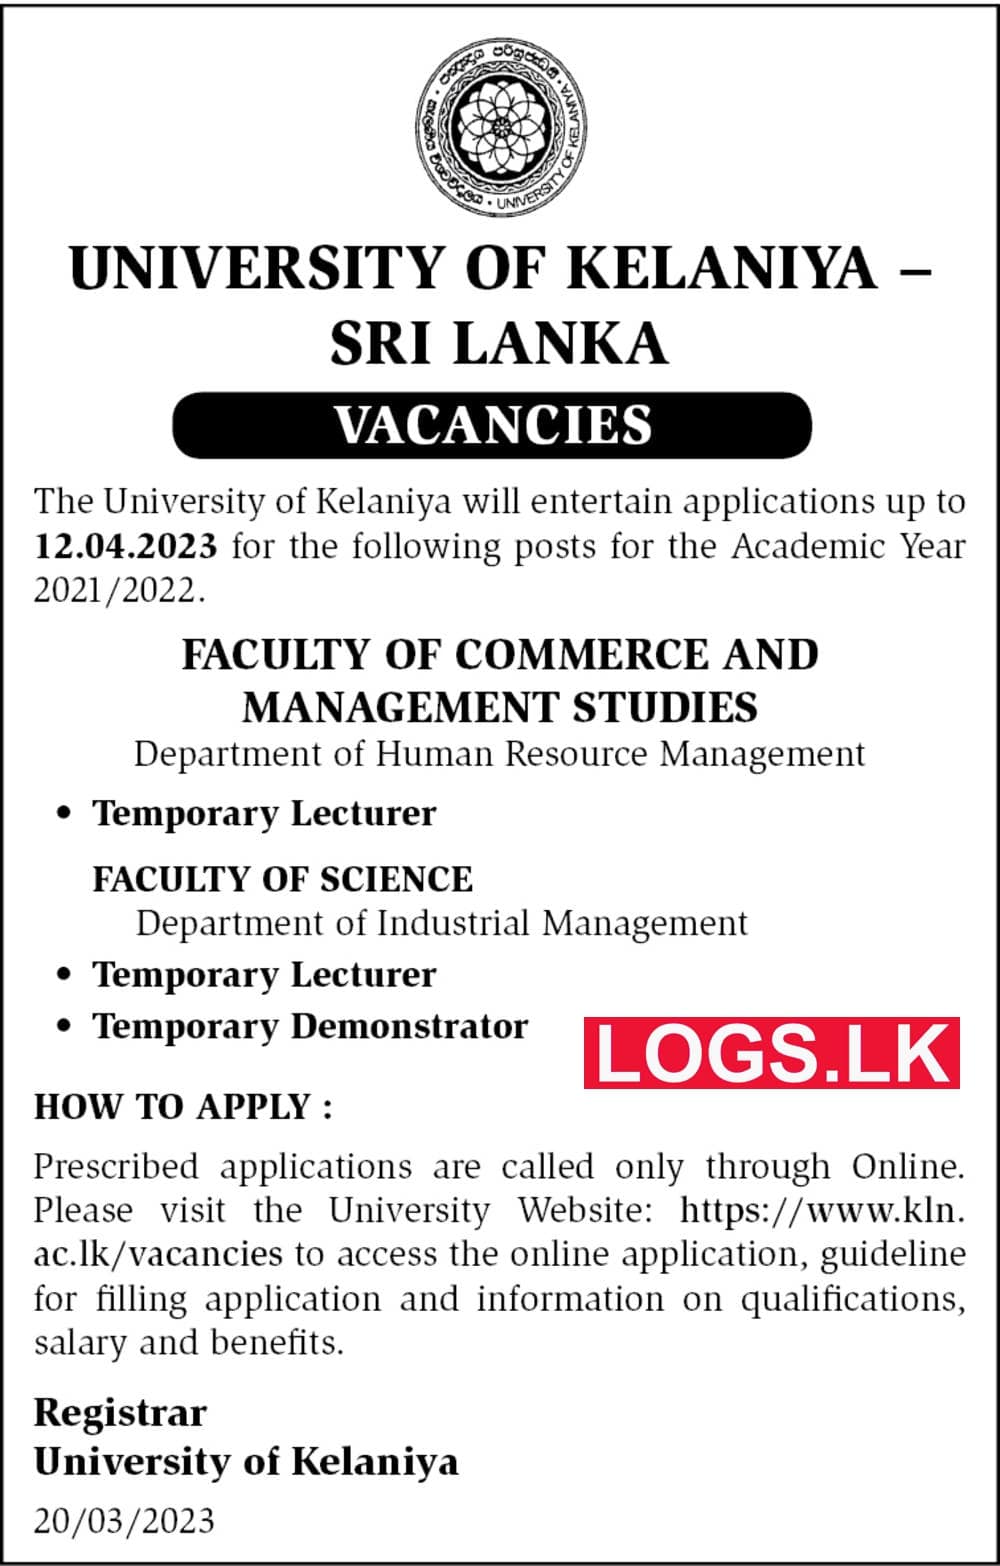 University of Kelaniya Vacancies 2023 Application for Temporary Lecturer, Temporary Demonstrator